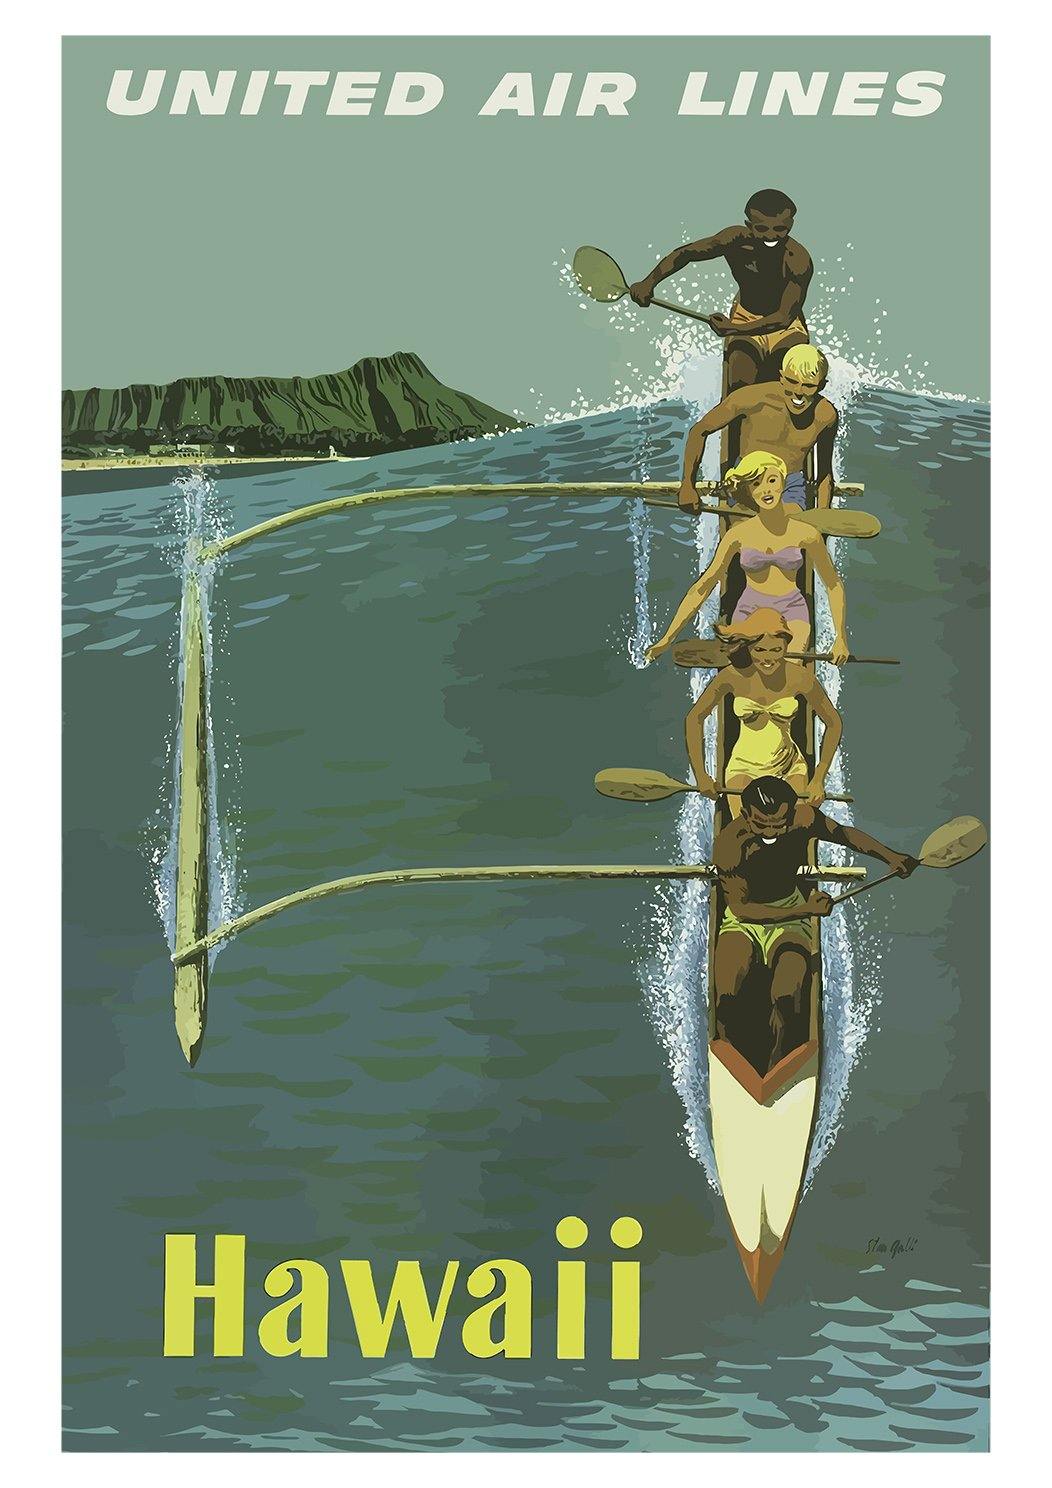 HAWAII CANOE POSTER: Vintage Travel Print - Pimlico Prints